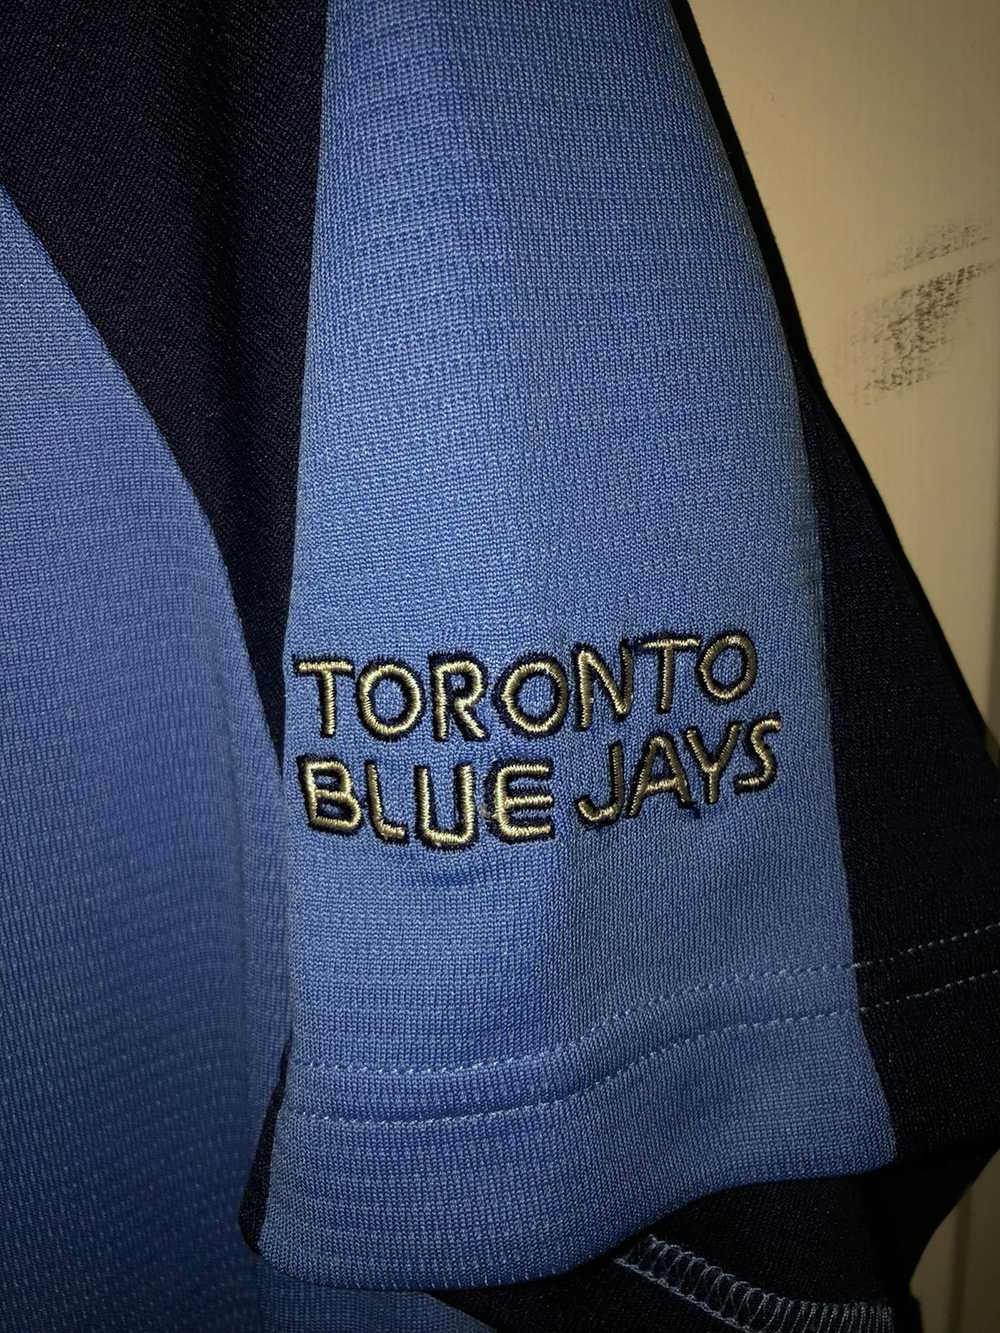 Majestic Toronto Blue Jays Jersey - image 5